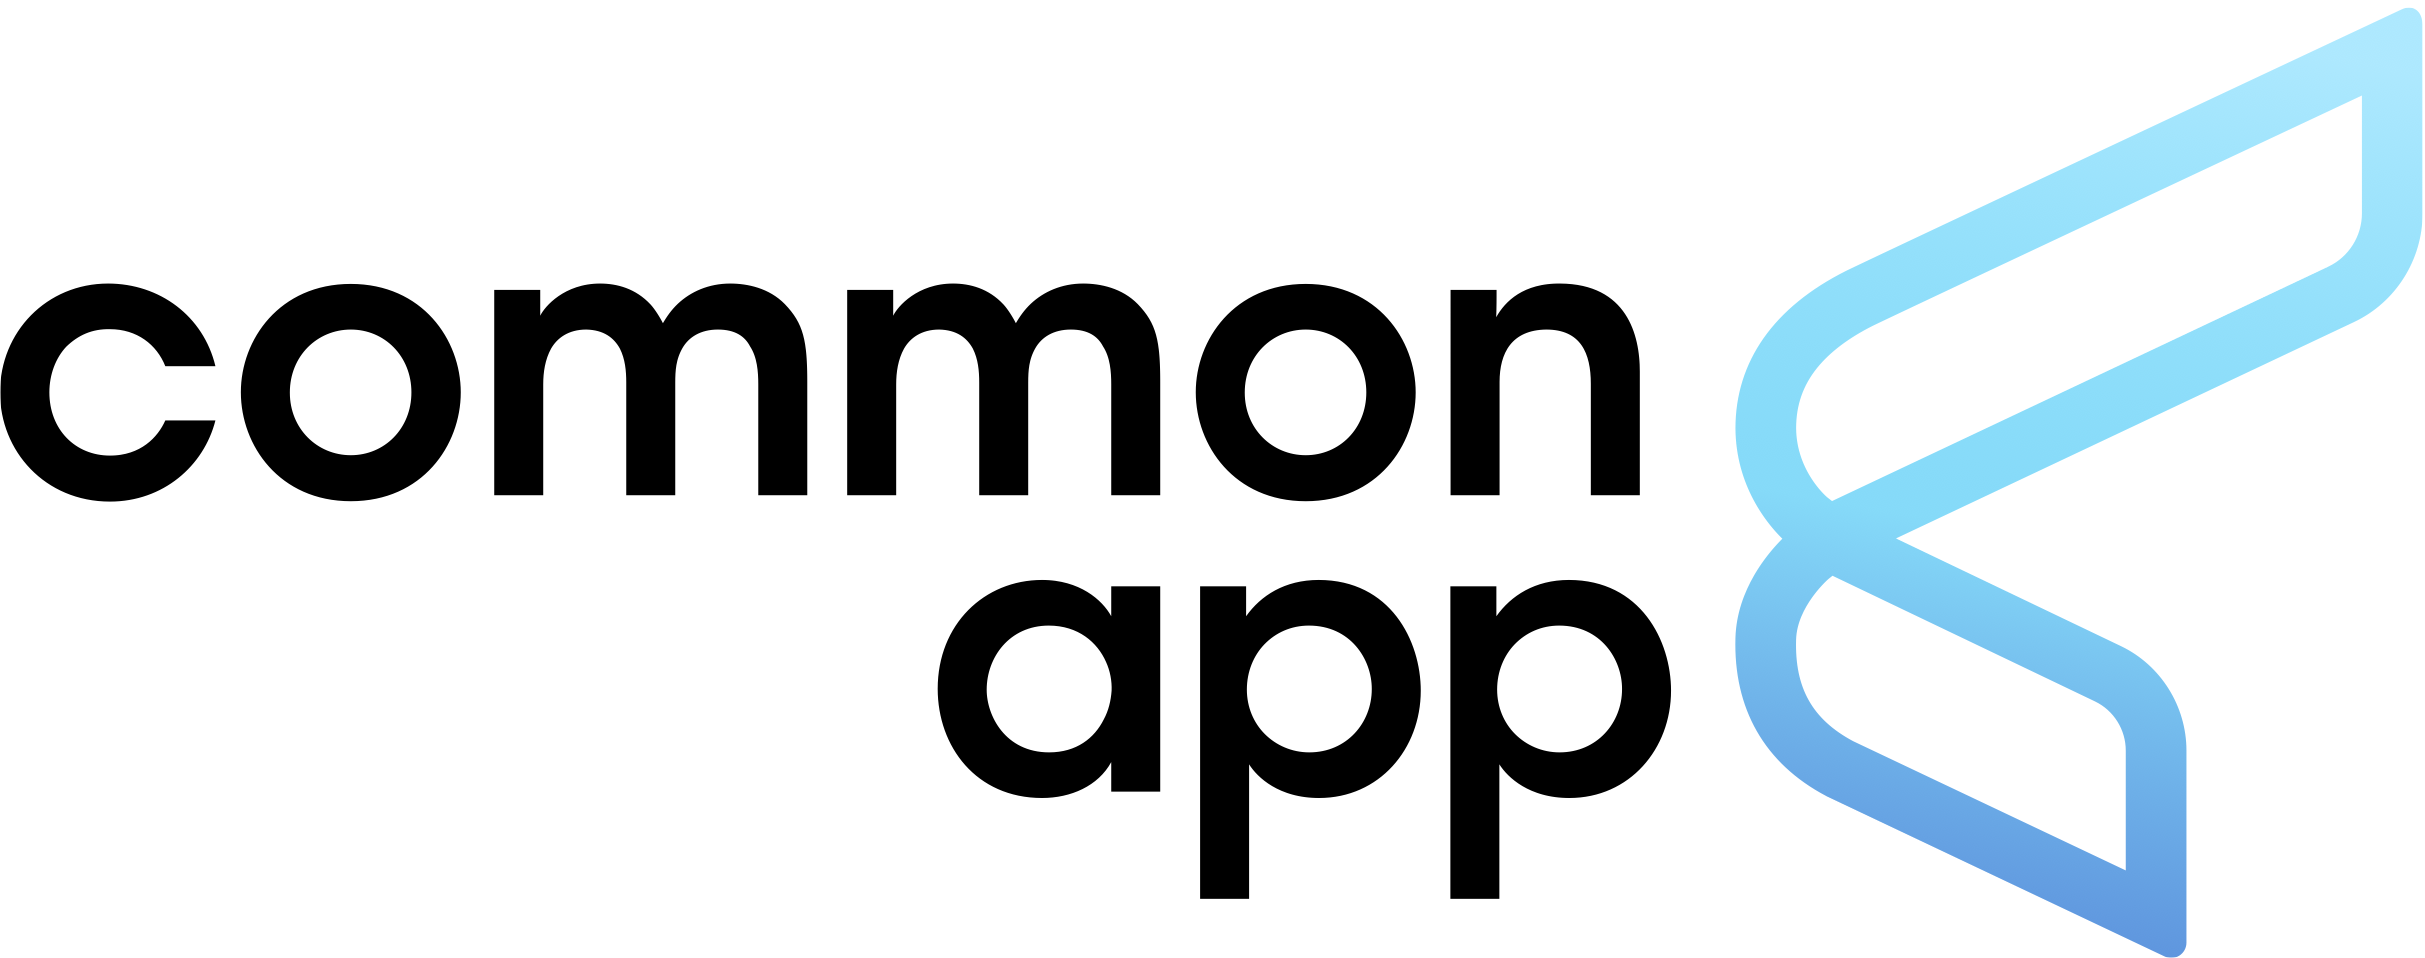 common app essay prompts transfer 2022